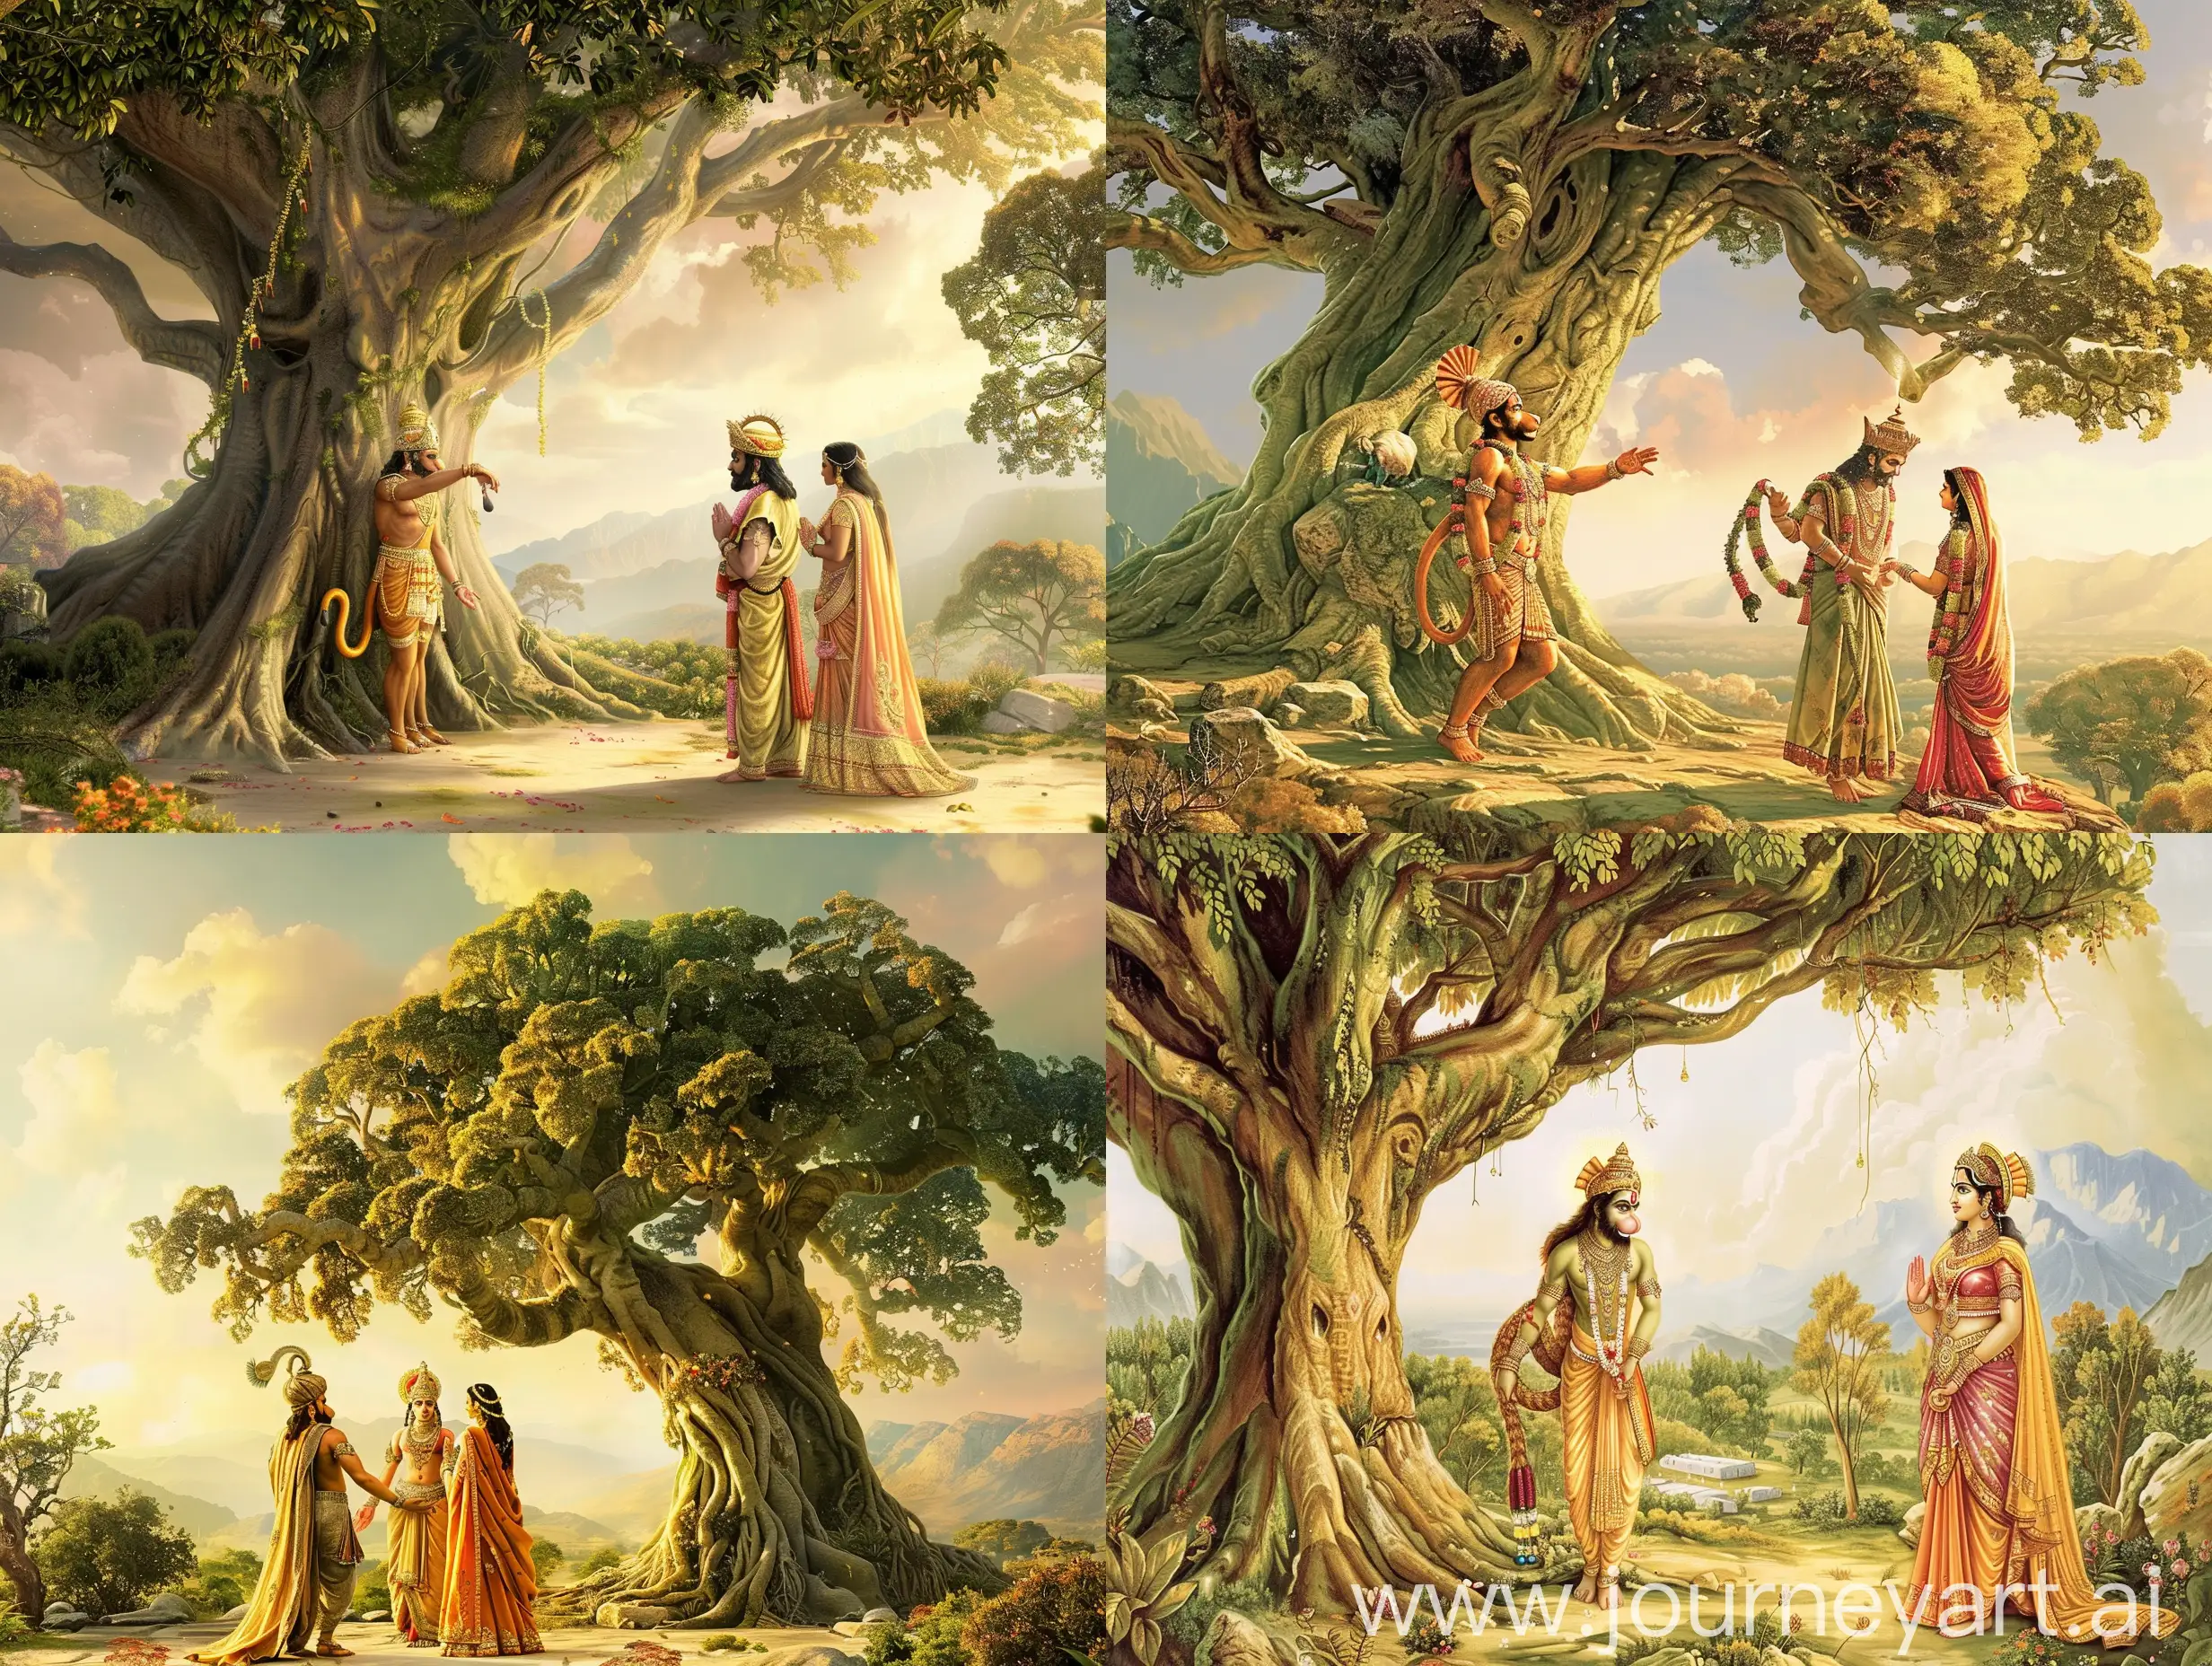 Divine-Depiction-Lord-Hanuman-Shri-Ram-and-Mata-Sita-Beneath-Ancient-Banyan-Tree